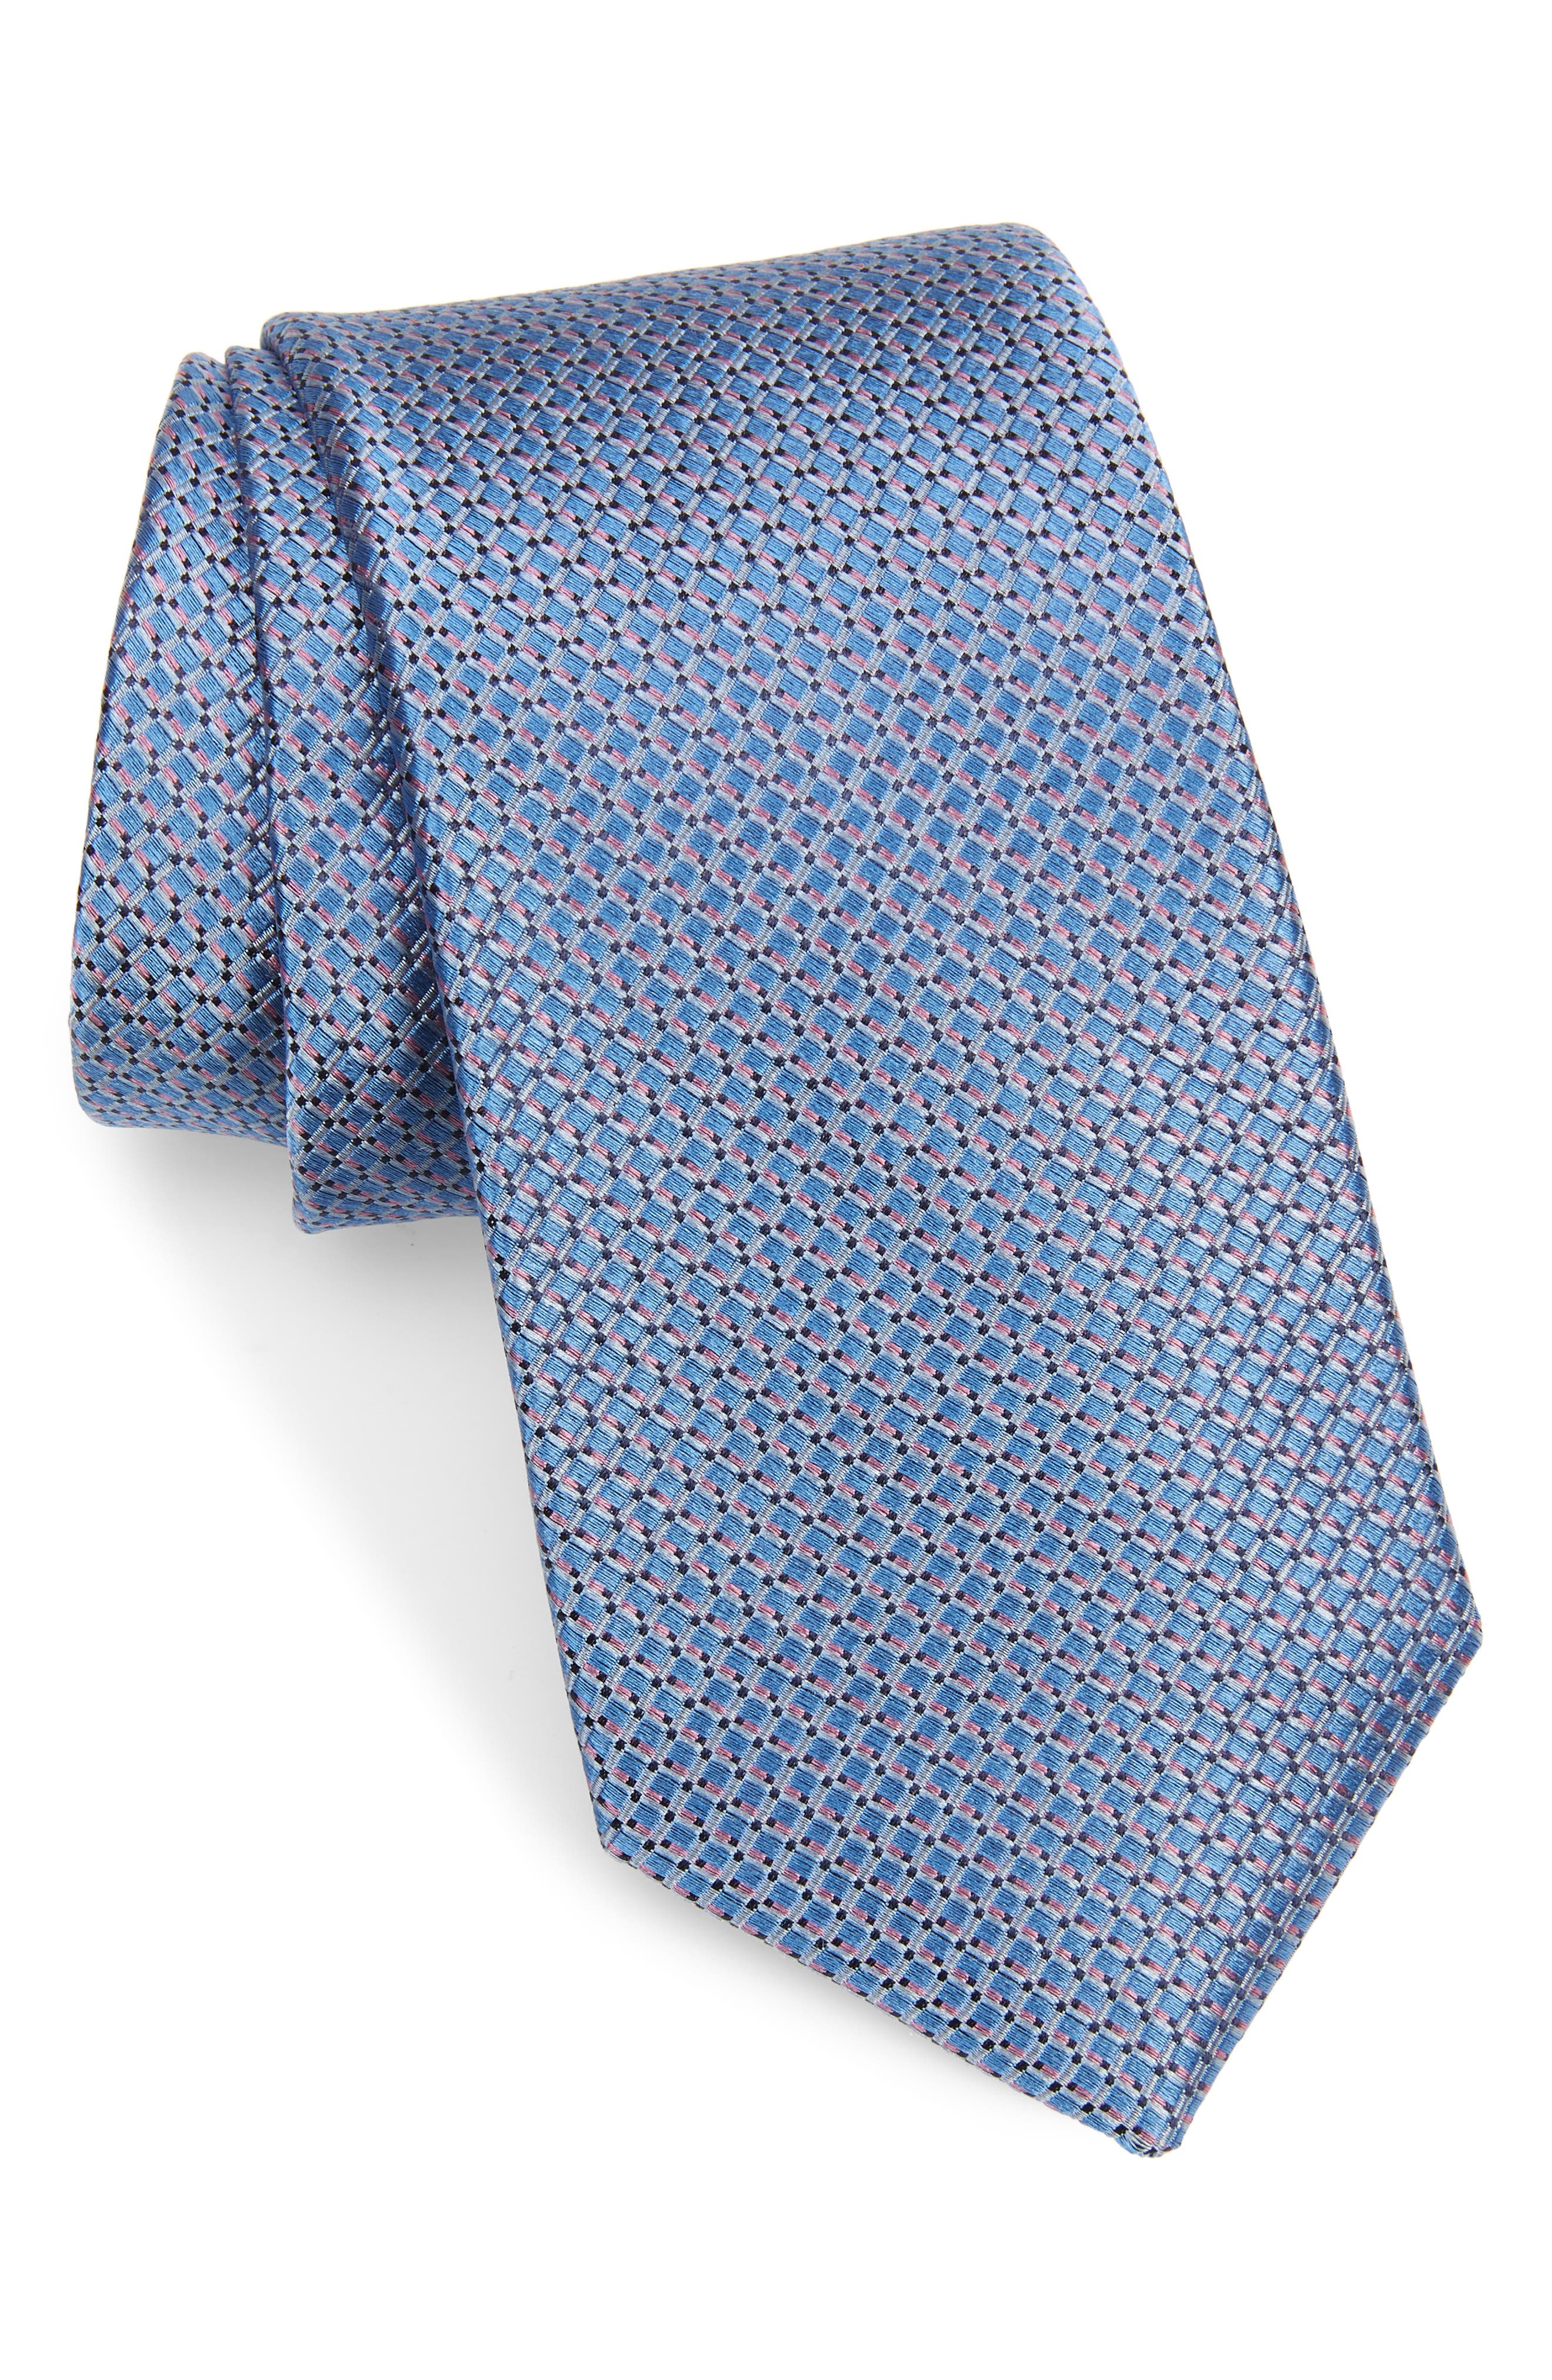 Navy Blue Gingham Check Necktie~Anniversary Gift~Wedding Tie~Mens Gift~Boys Necktie~Mens Necktie~Wedding~HoBo Ties~Mens Tie~Blue Tie